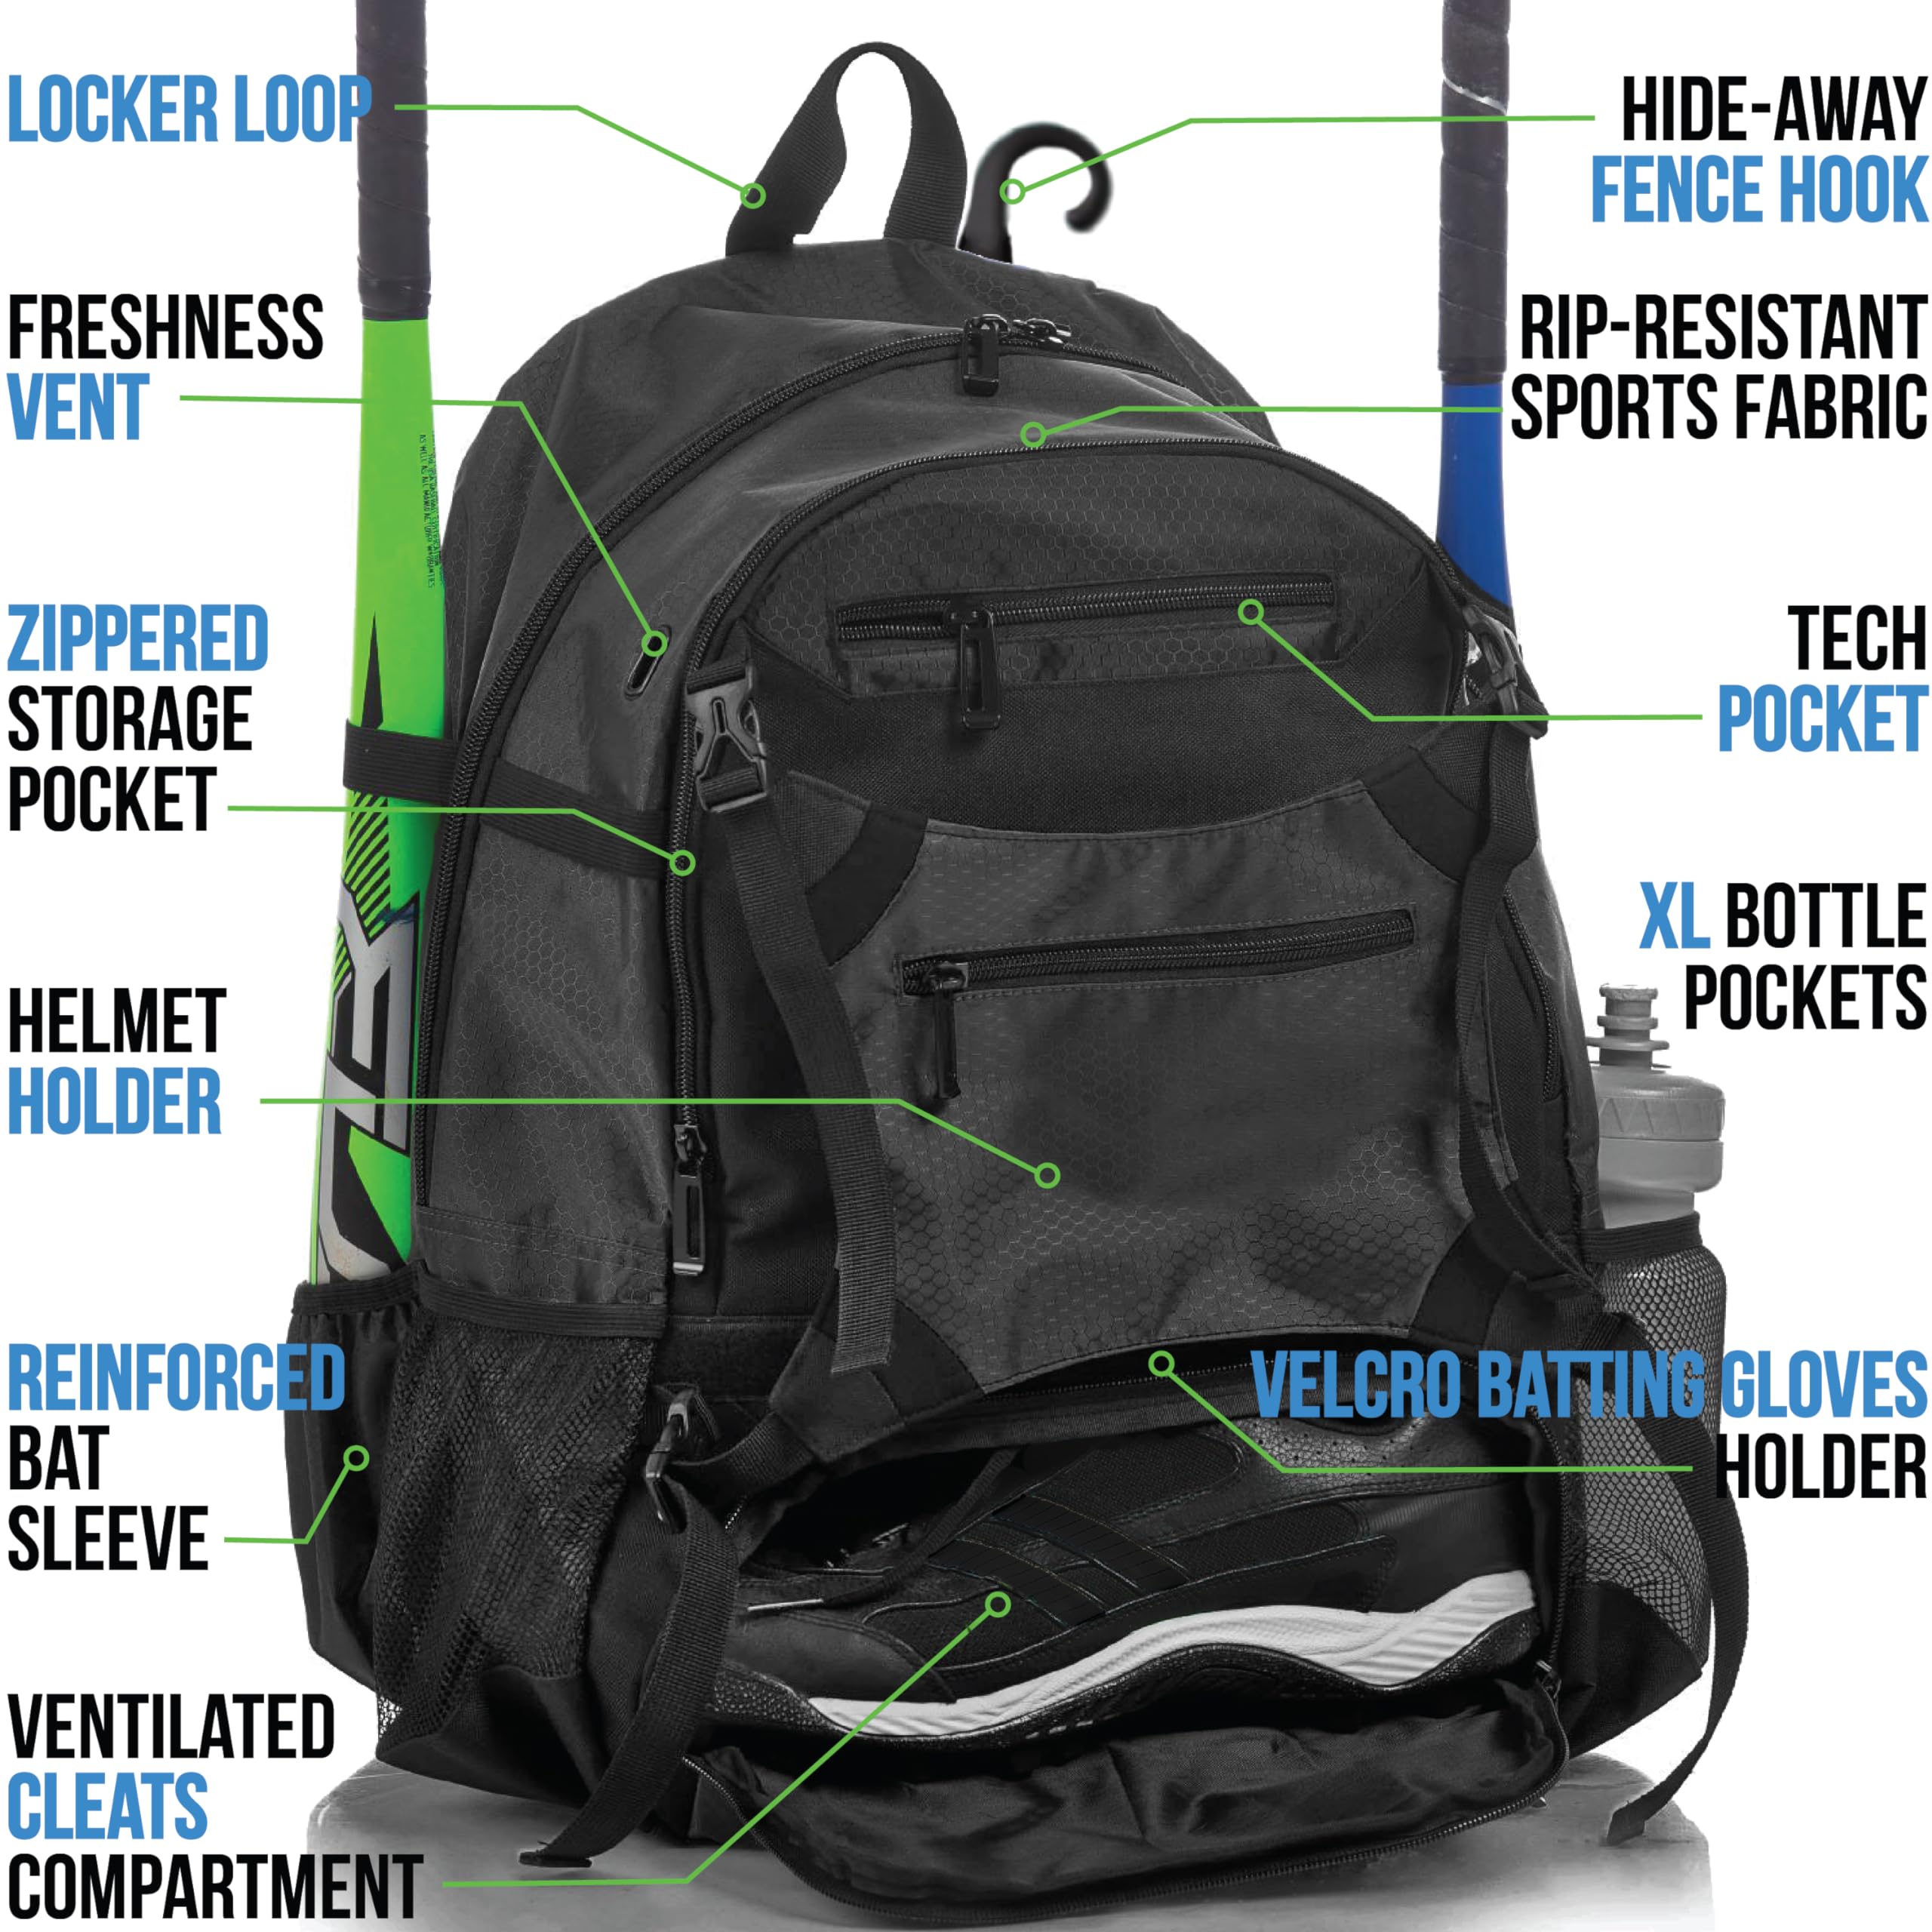 Athletico Advantage Baseball Bag - Baseball Backpack With External Helmet Holder for Baseball, T-Ball & Softball Equipment & Gear for Youth and Adults | Holds Bat, Helmet, Glove, Shoes  - Good